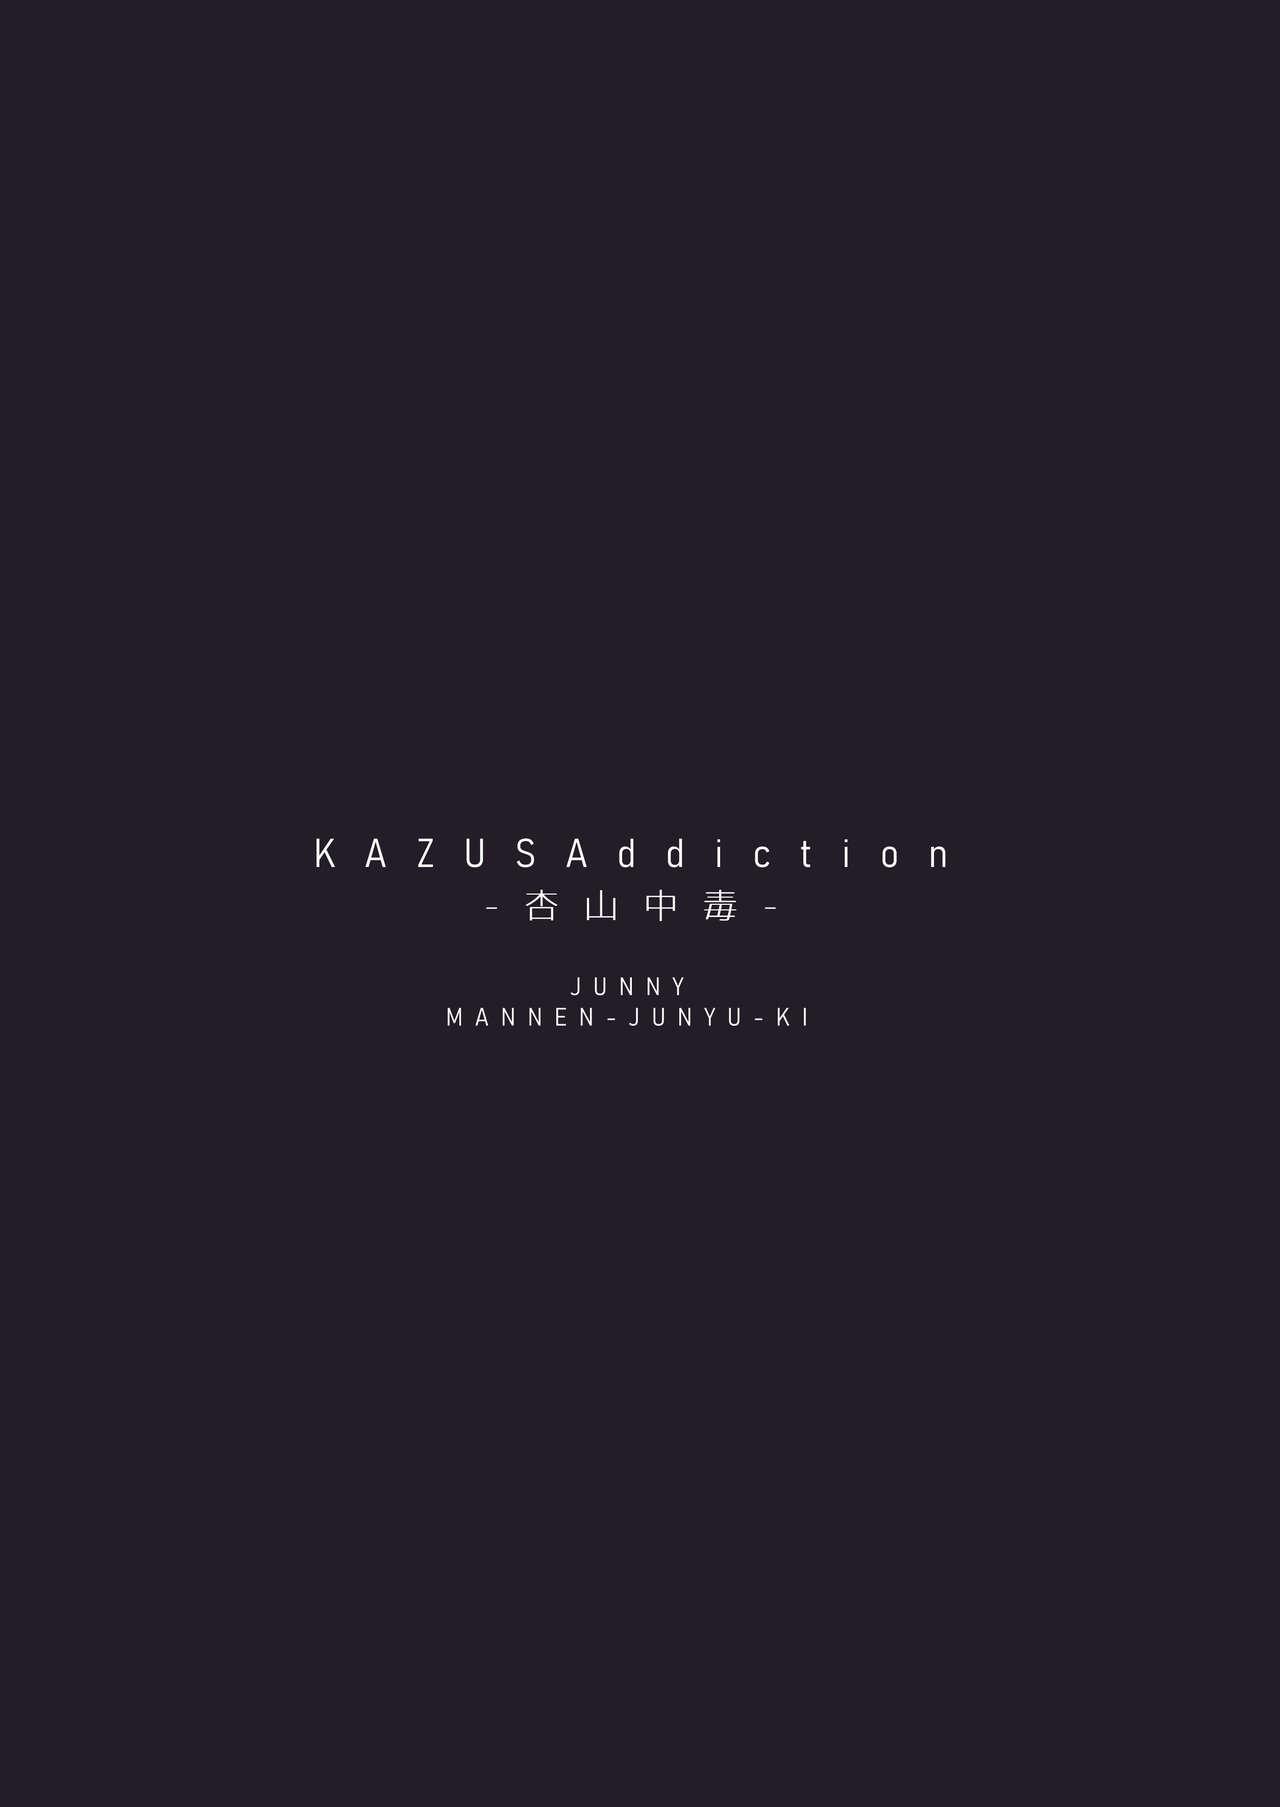 KAZUSAddiction 29